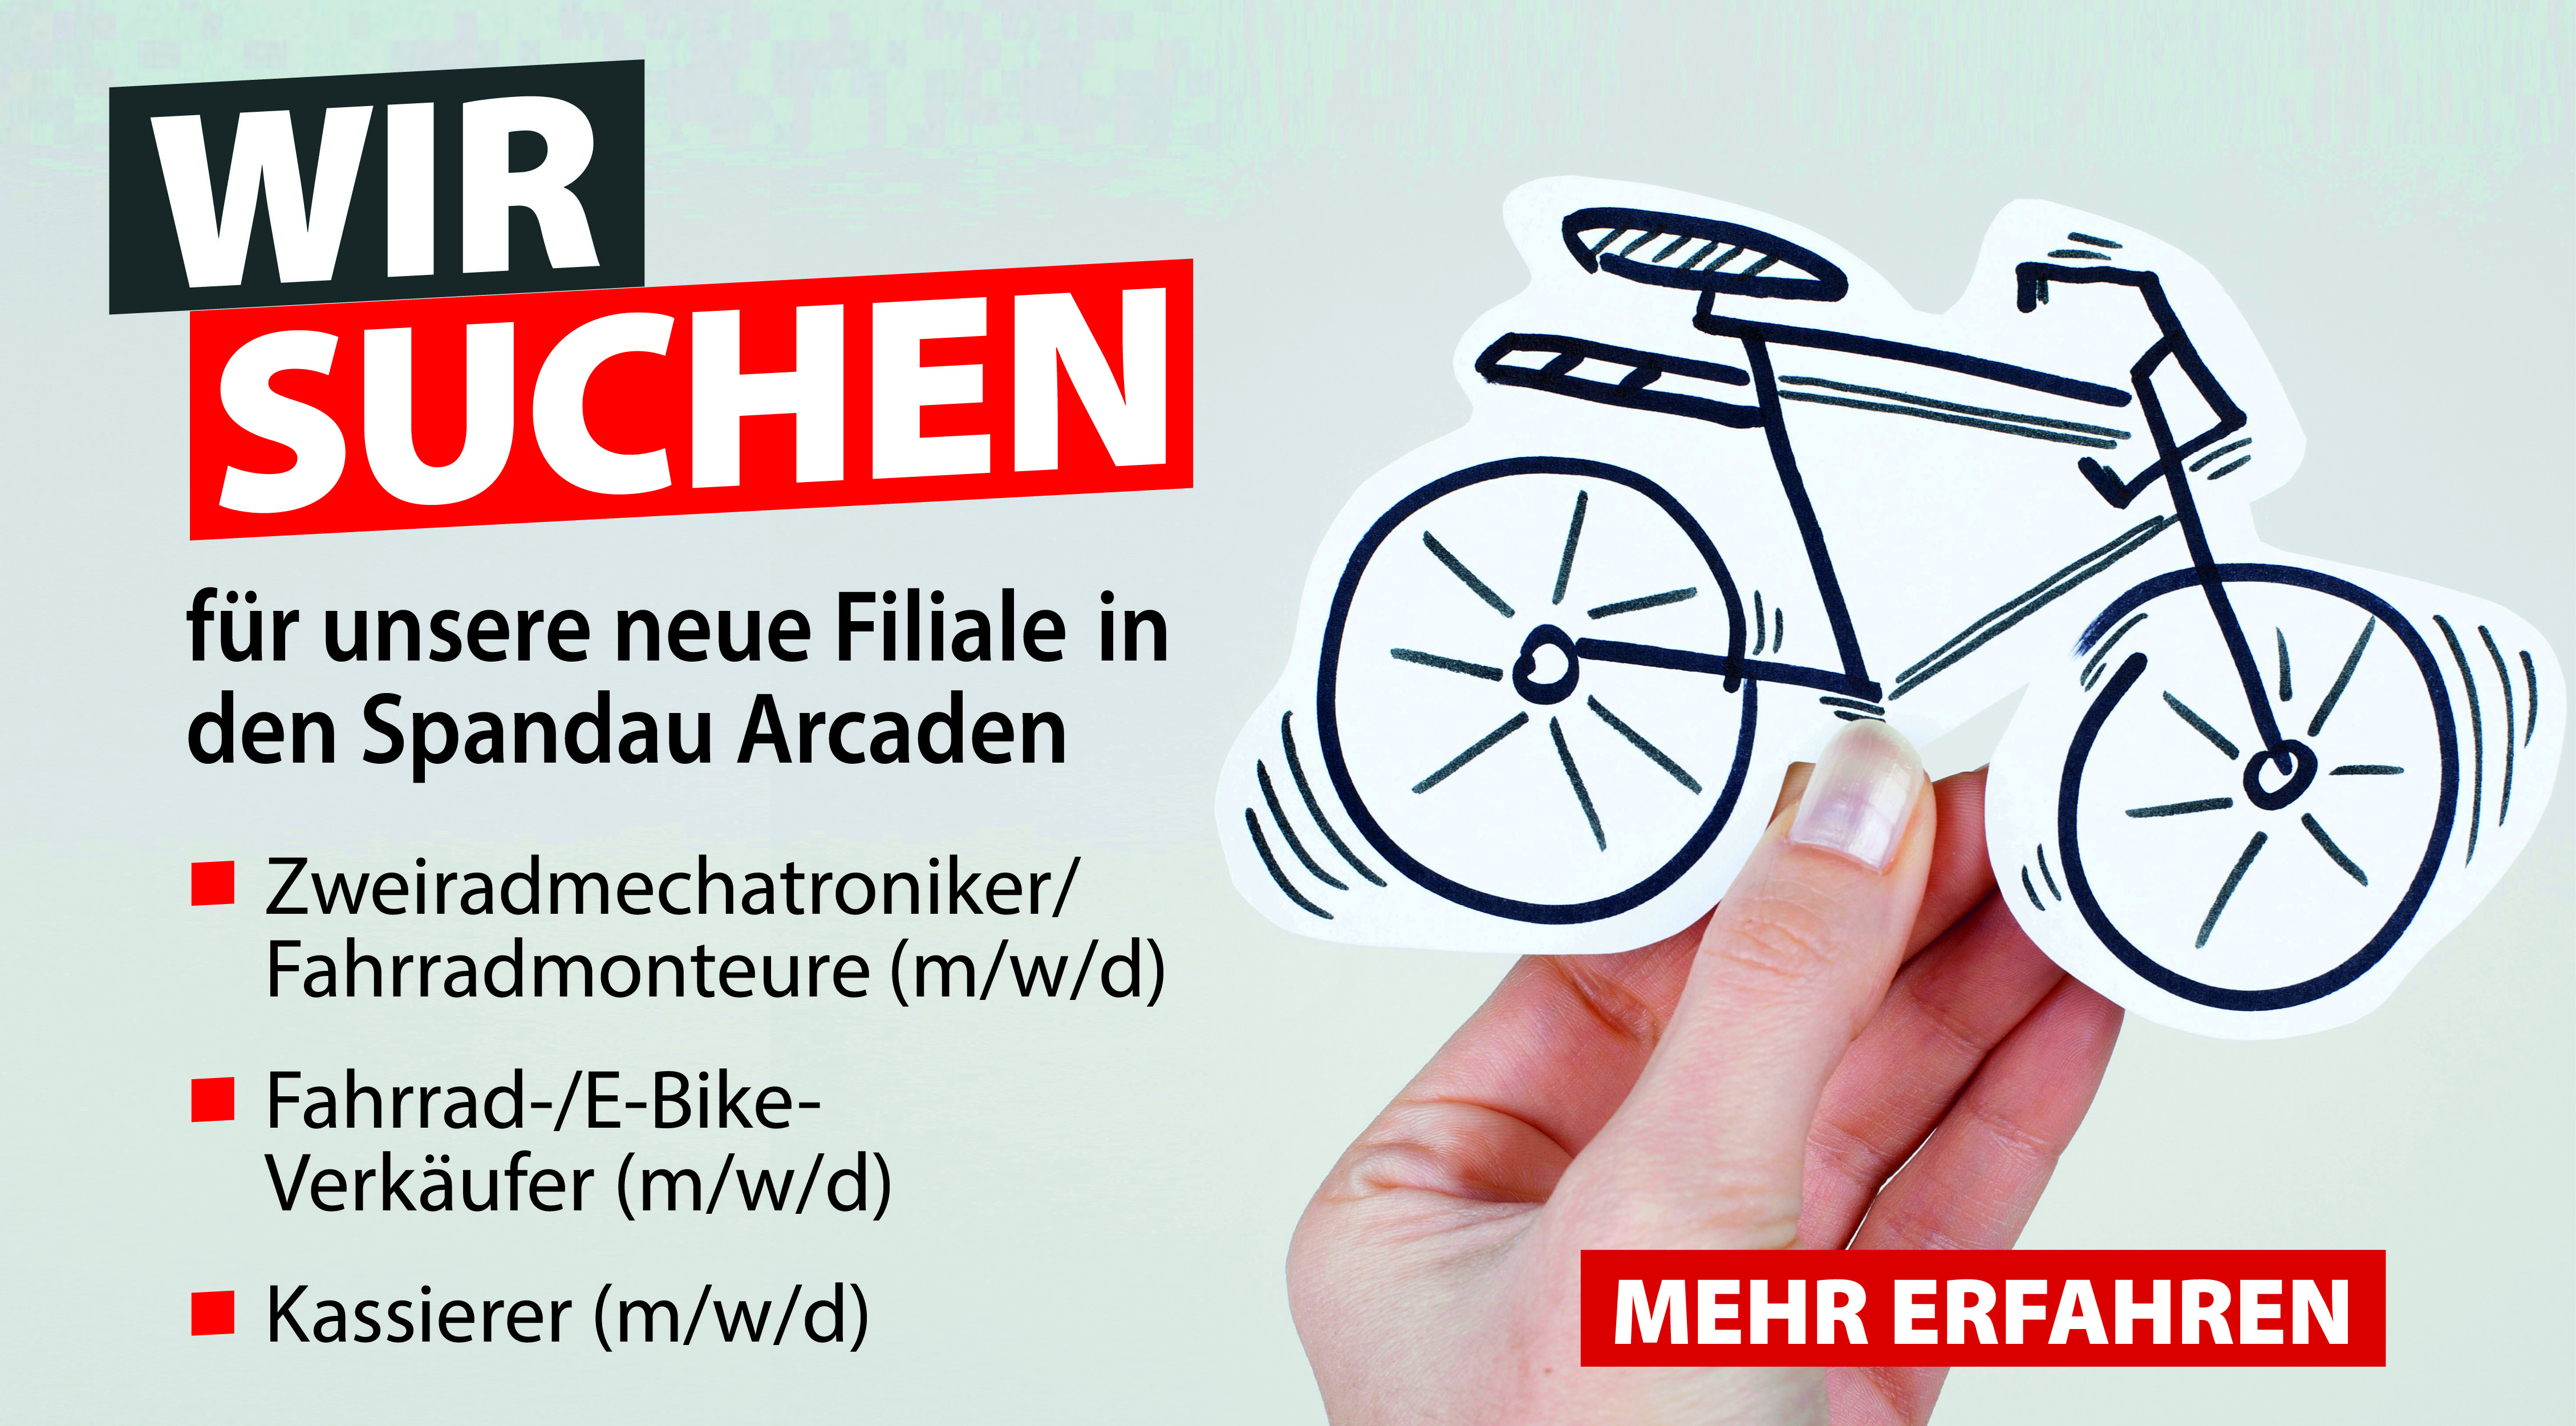 Fahrrad Berlin & Brandenburg – Fahrrad Online Shop - Radhaus